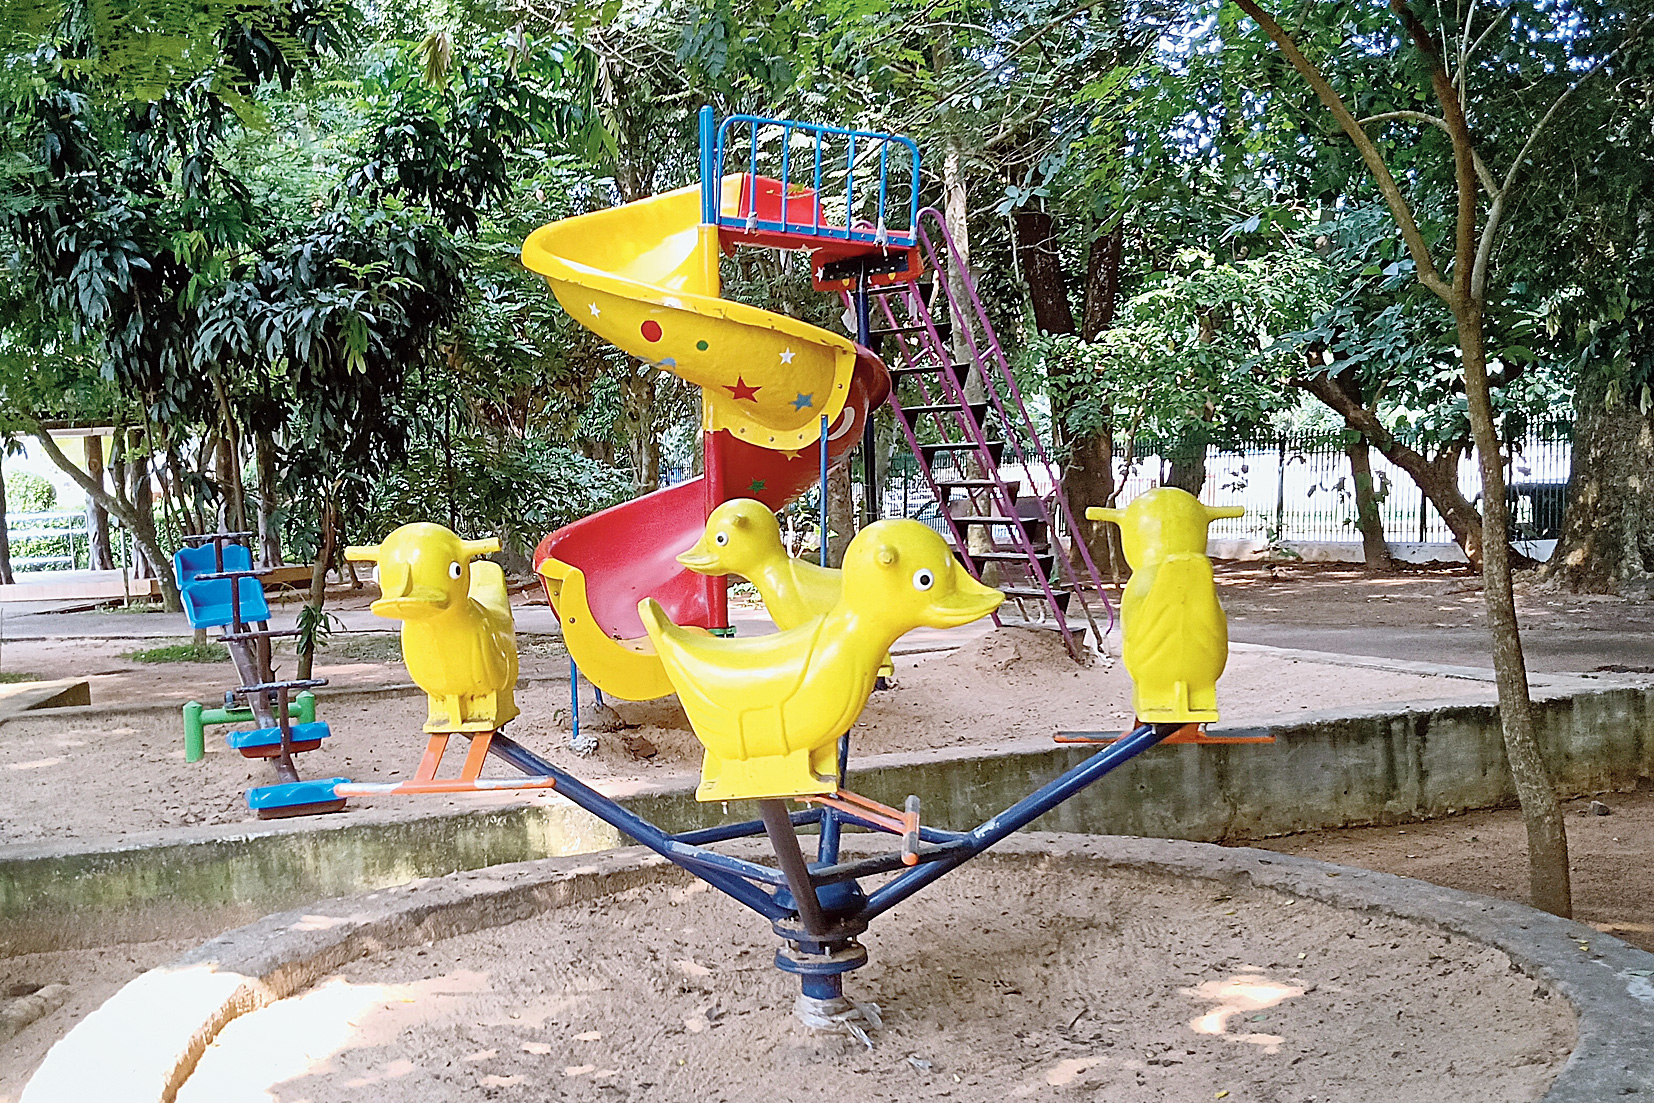 A joyride for children at Indira Gandhi Park in Bhubaneswar.